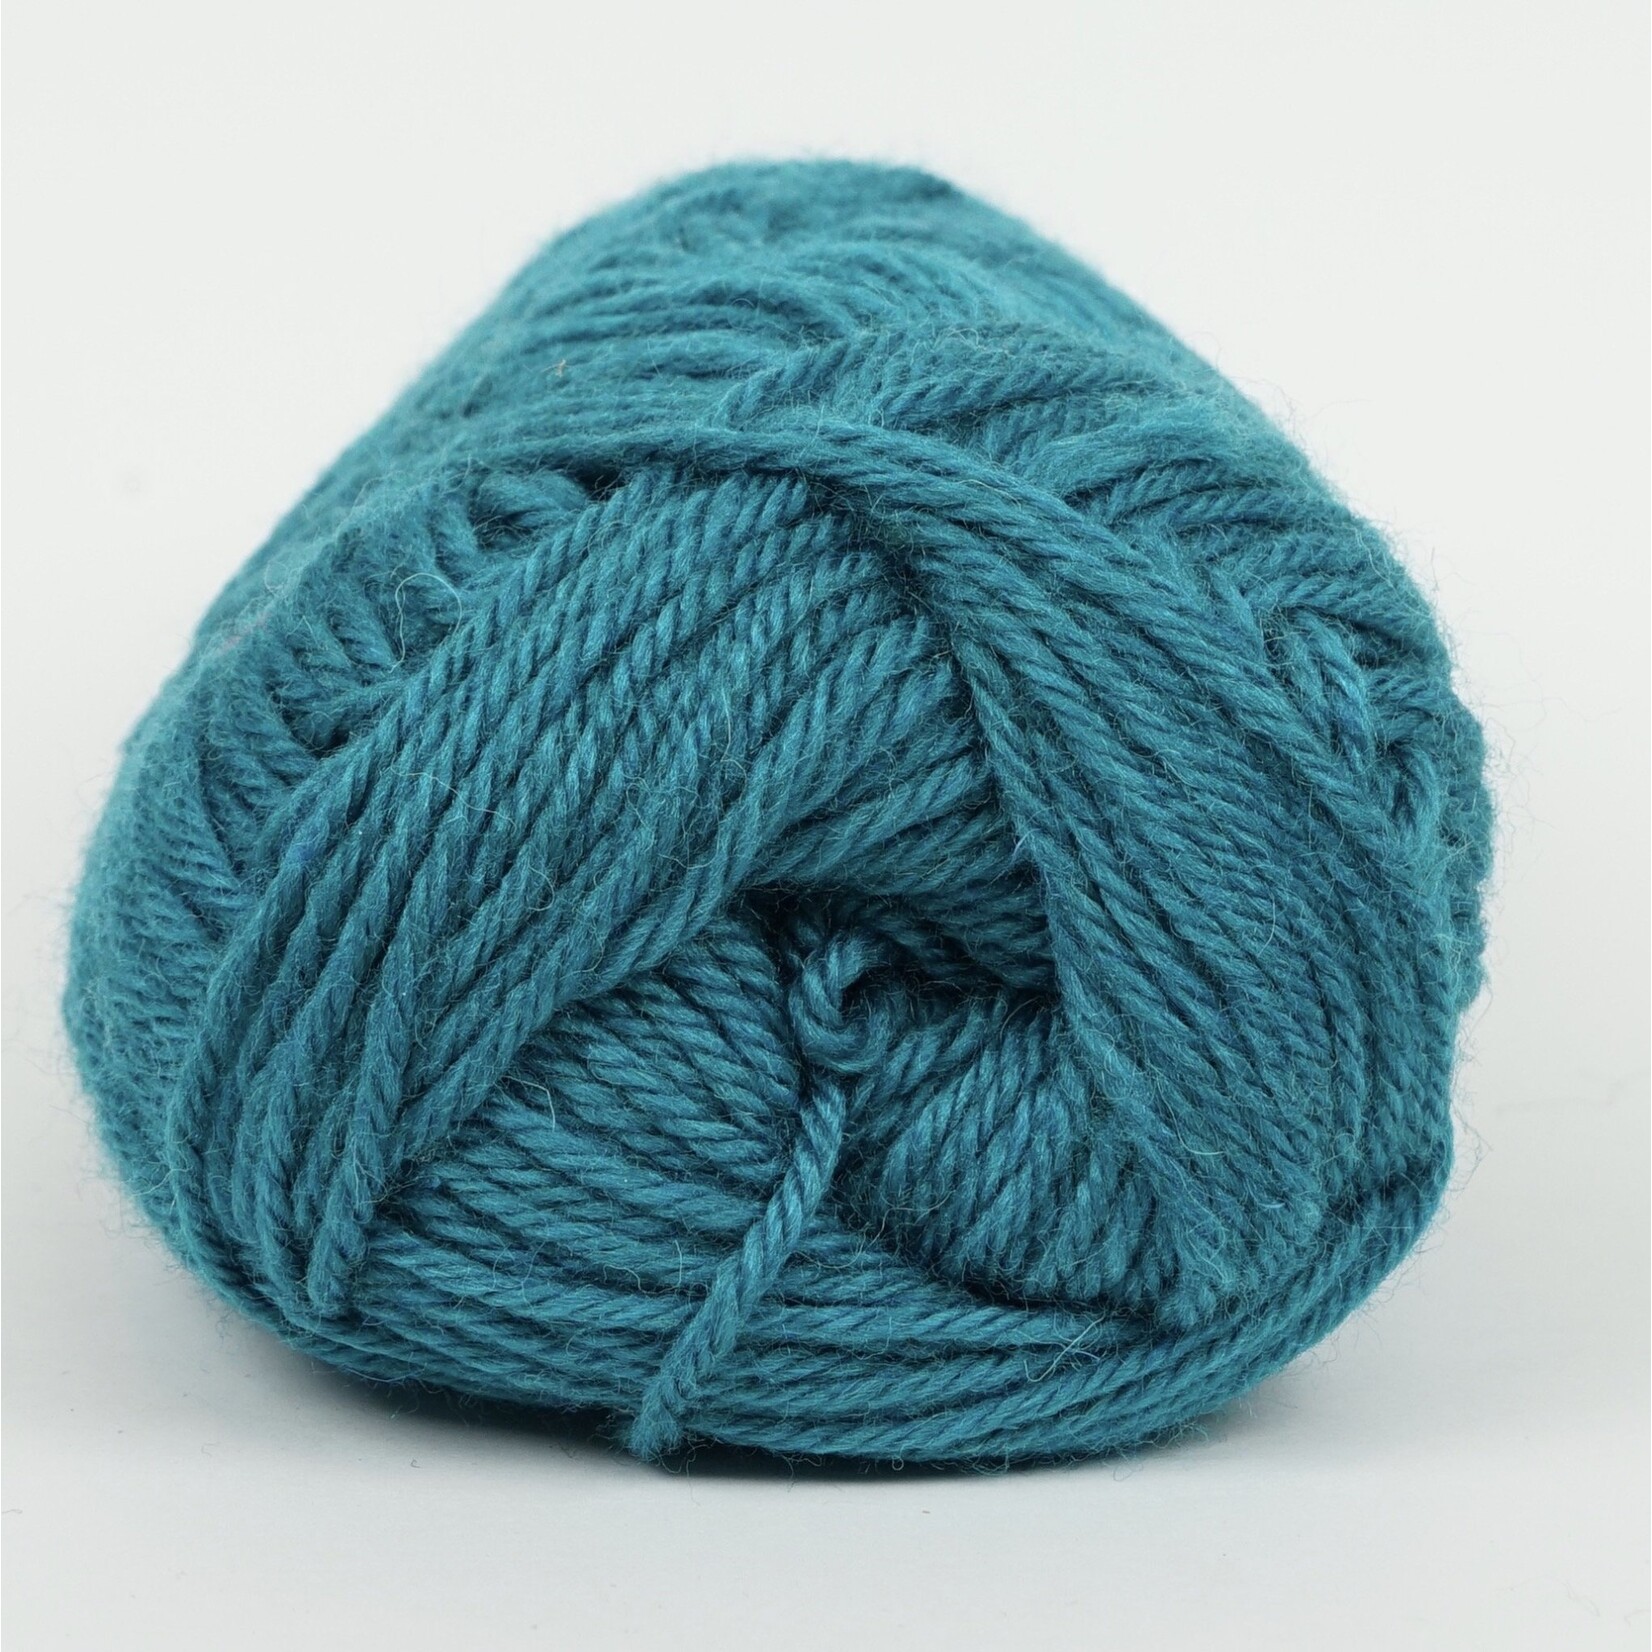 Kraemer Yarns Yarn - Perfection Worsted Turquoise